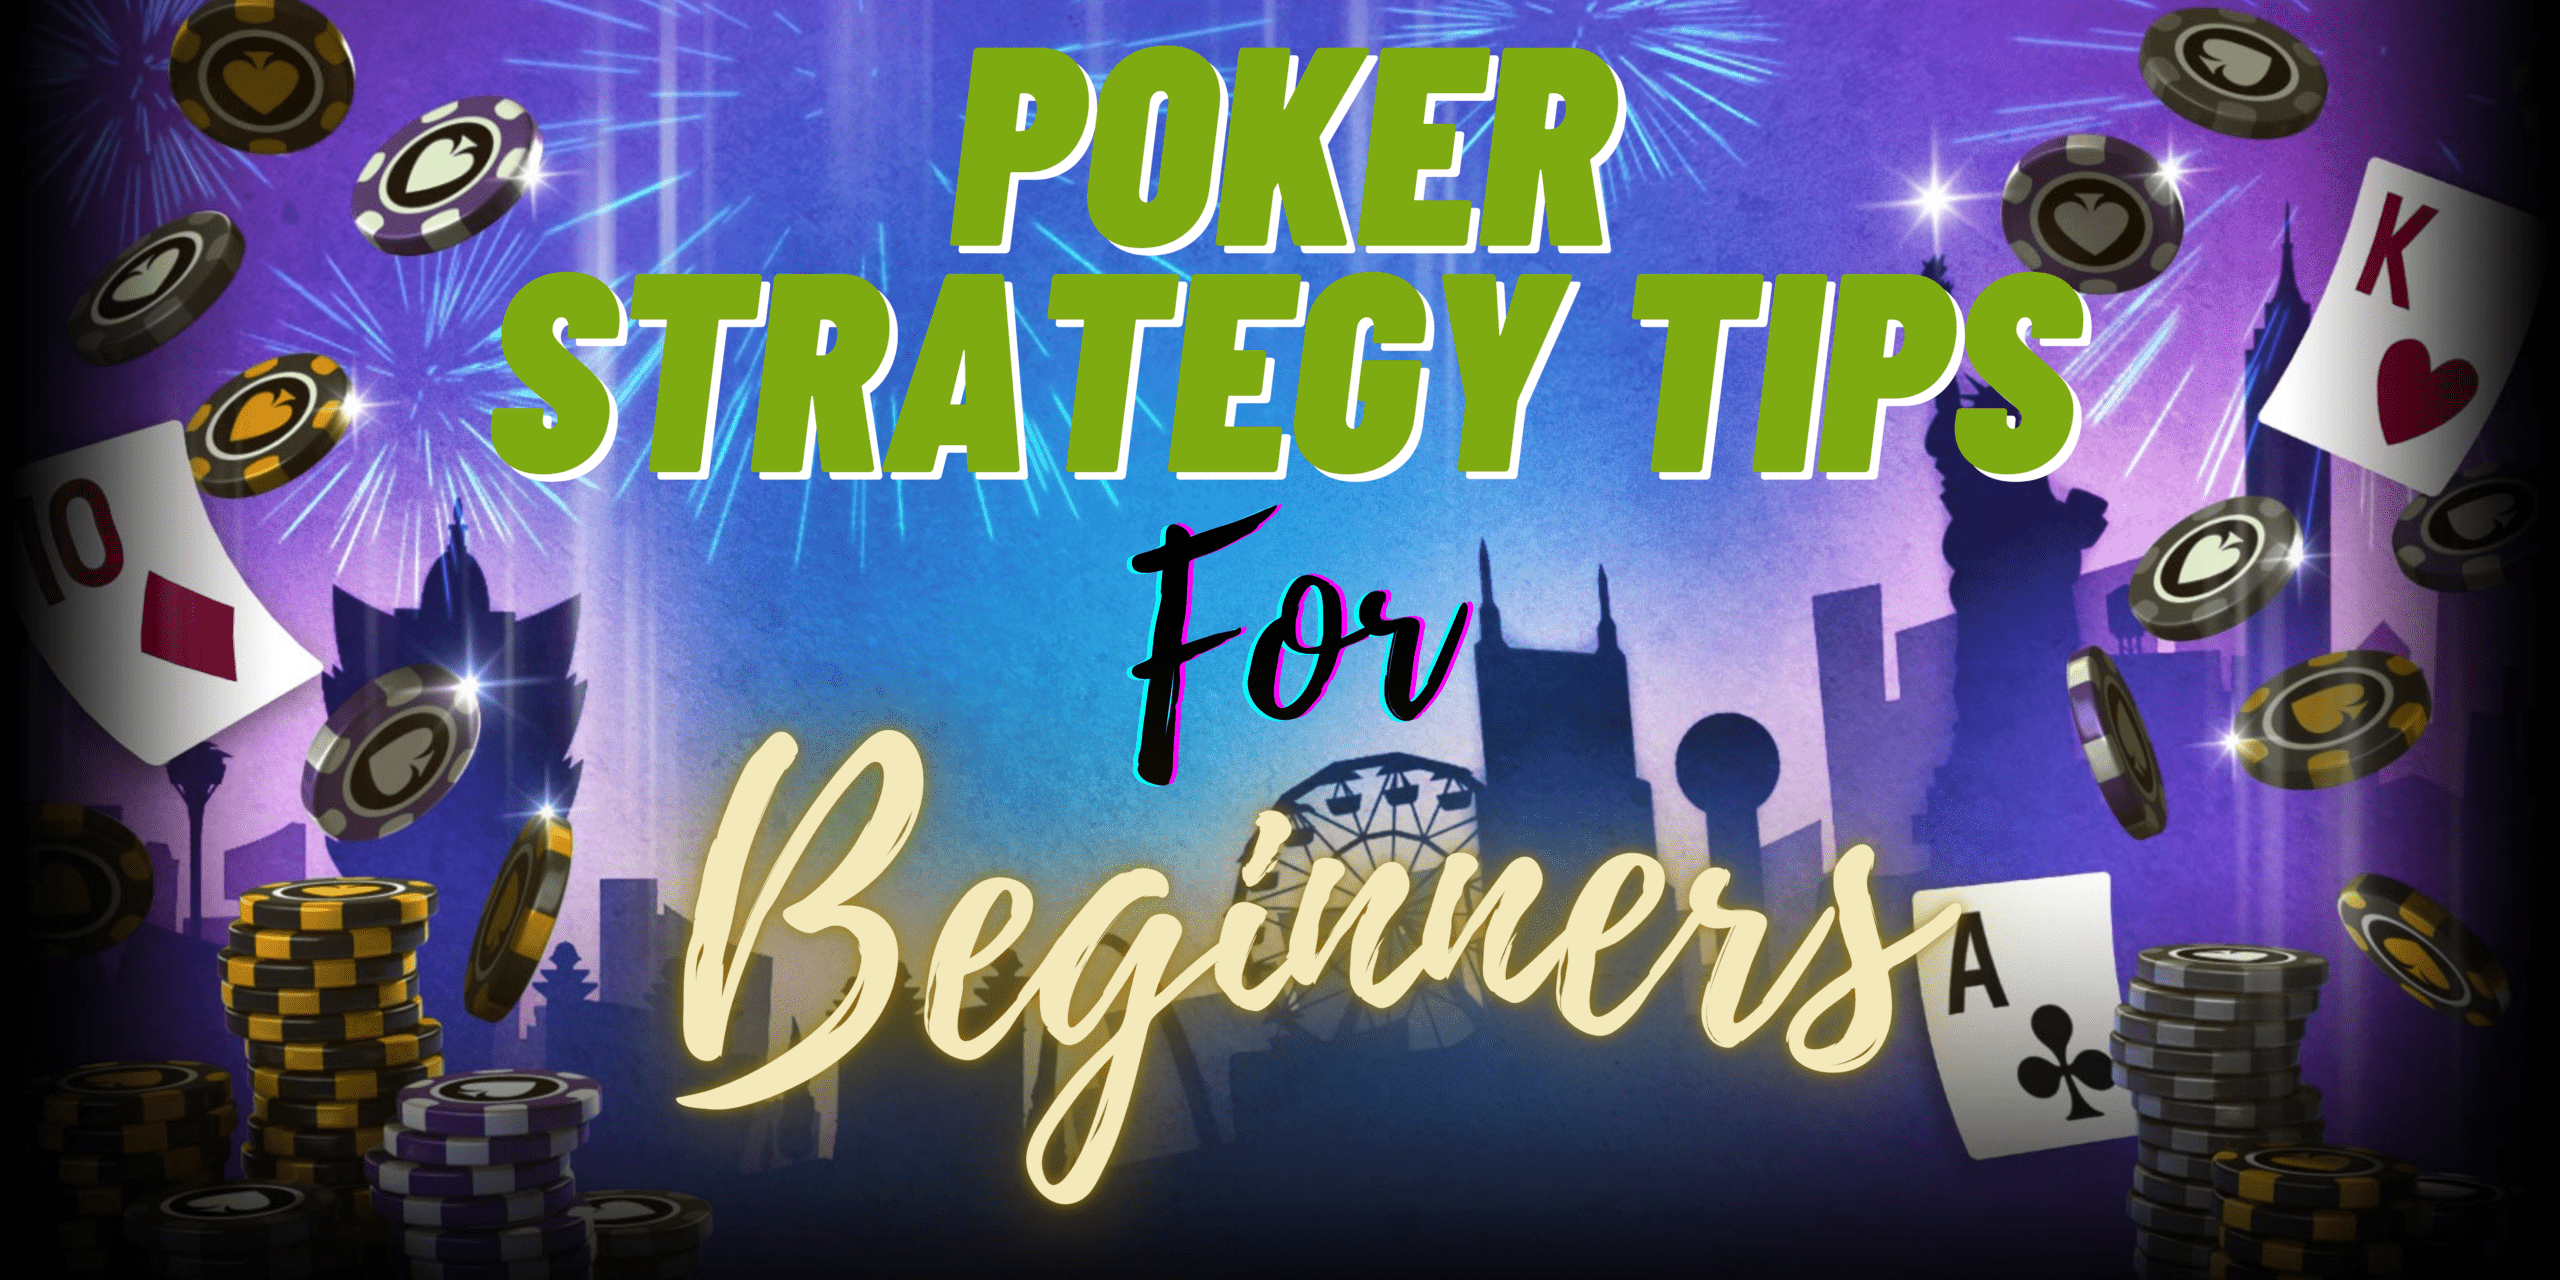 Poker Strategy Tips for Beginners